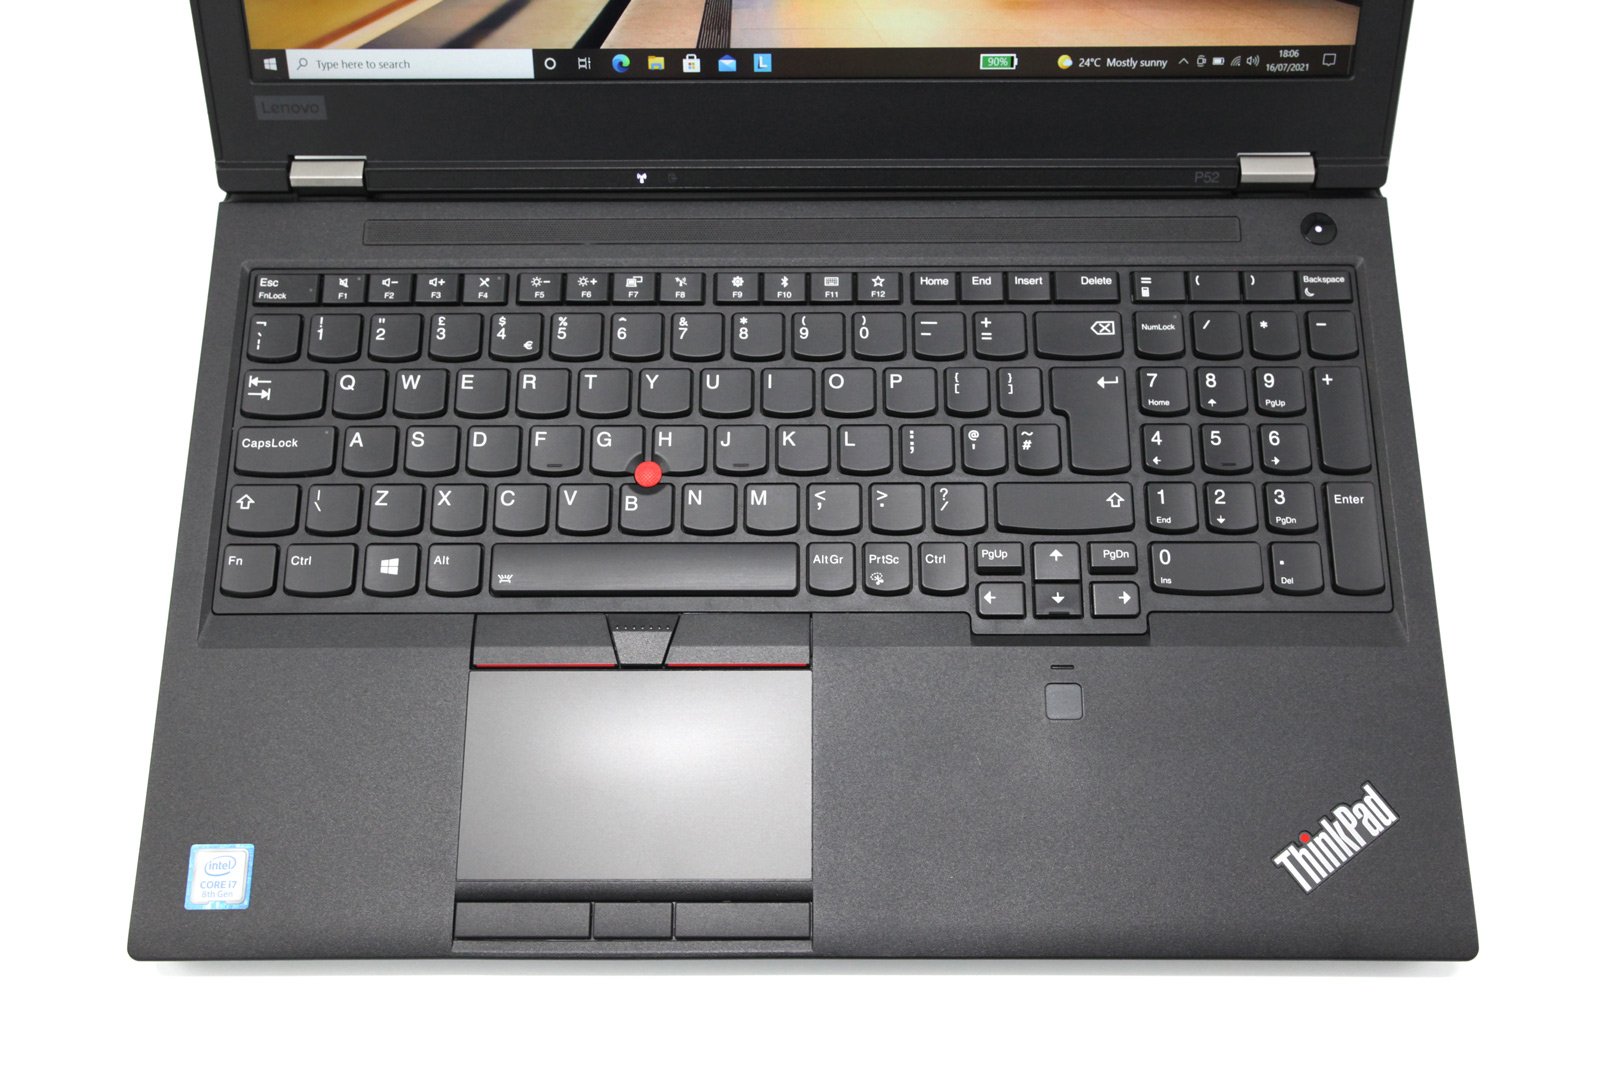 Lenovo ThinkPad P52 15.6" Laptop: 8th Gen i7 16GB RAM 256GB+1TB, Quadro Warranty - CruiseTech